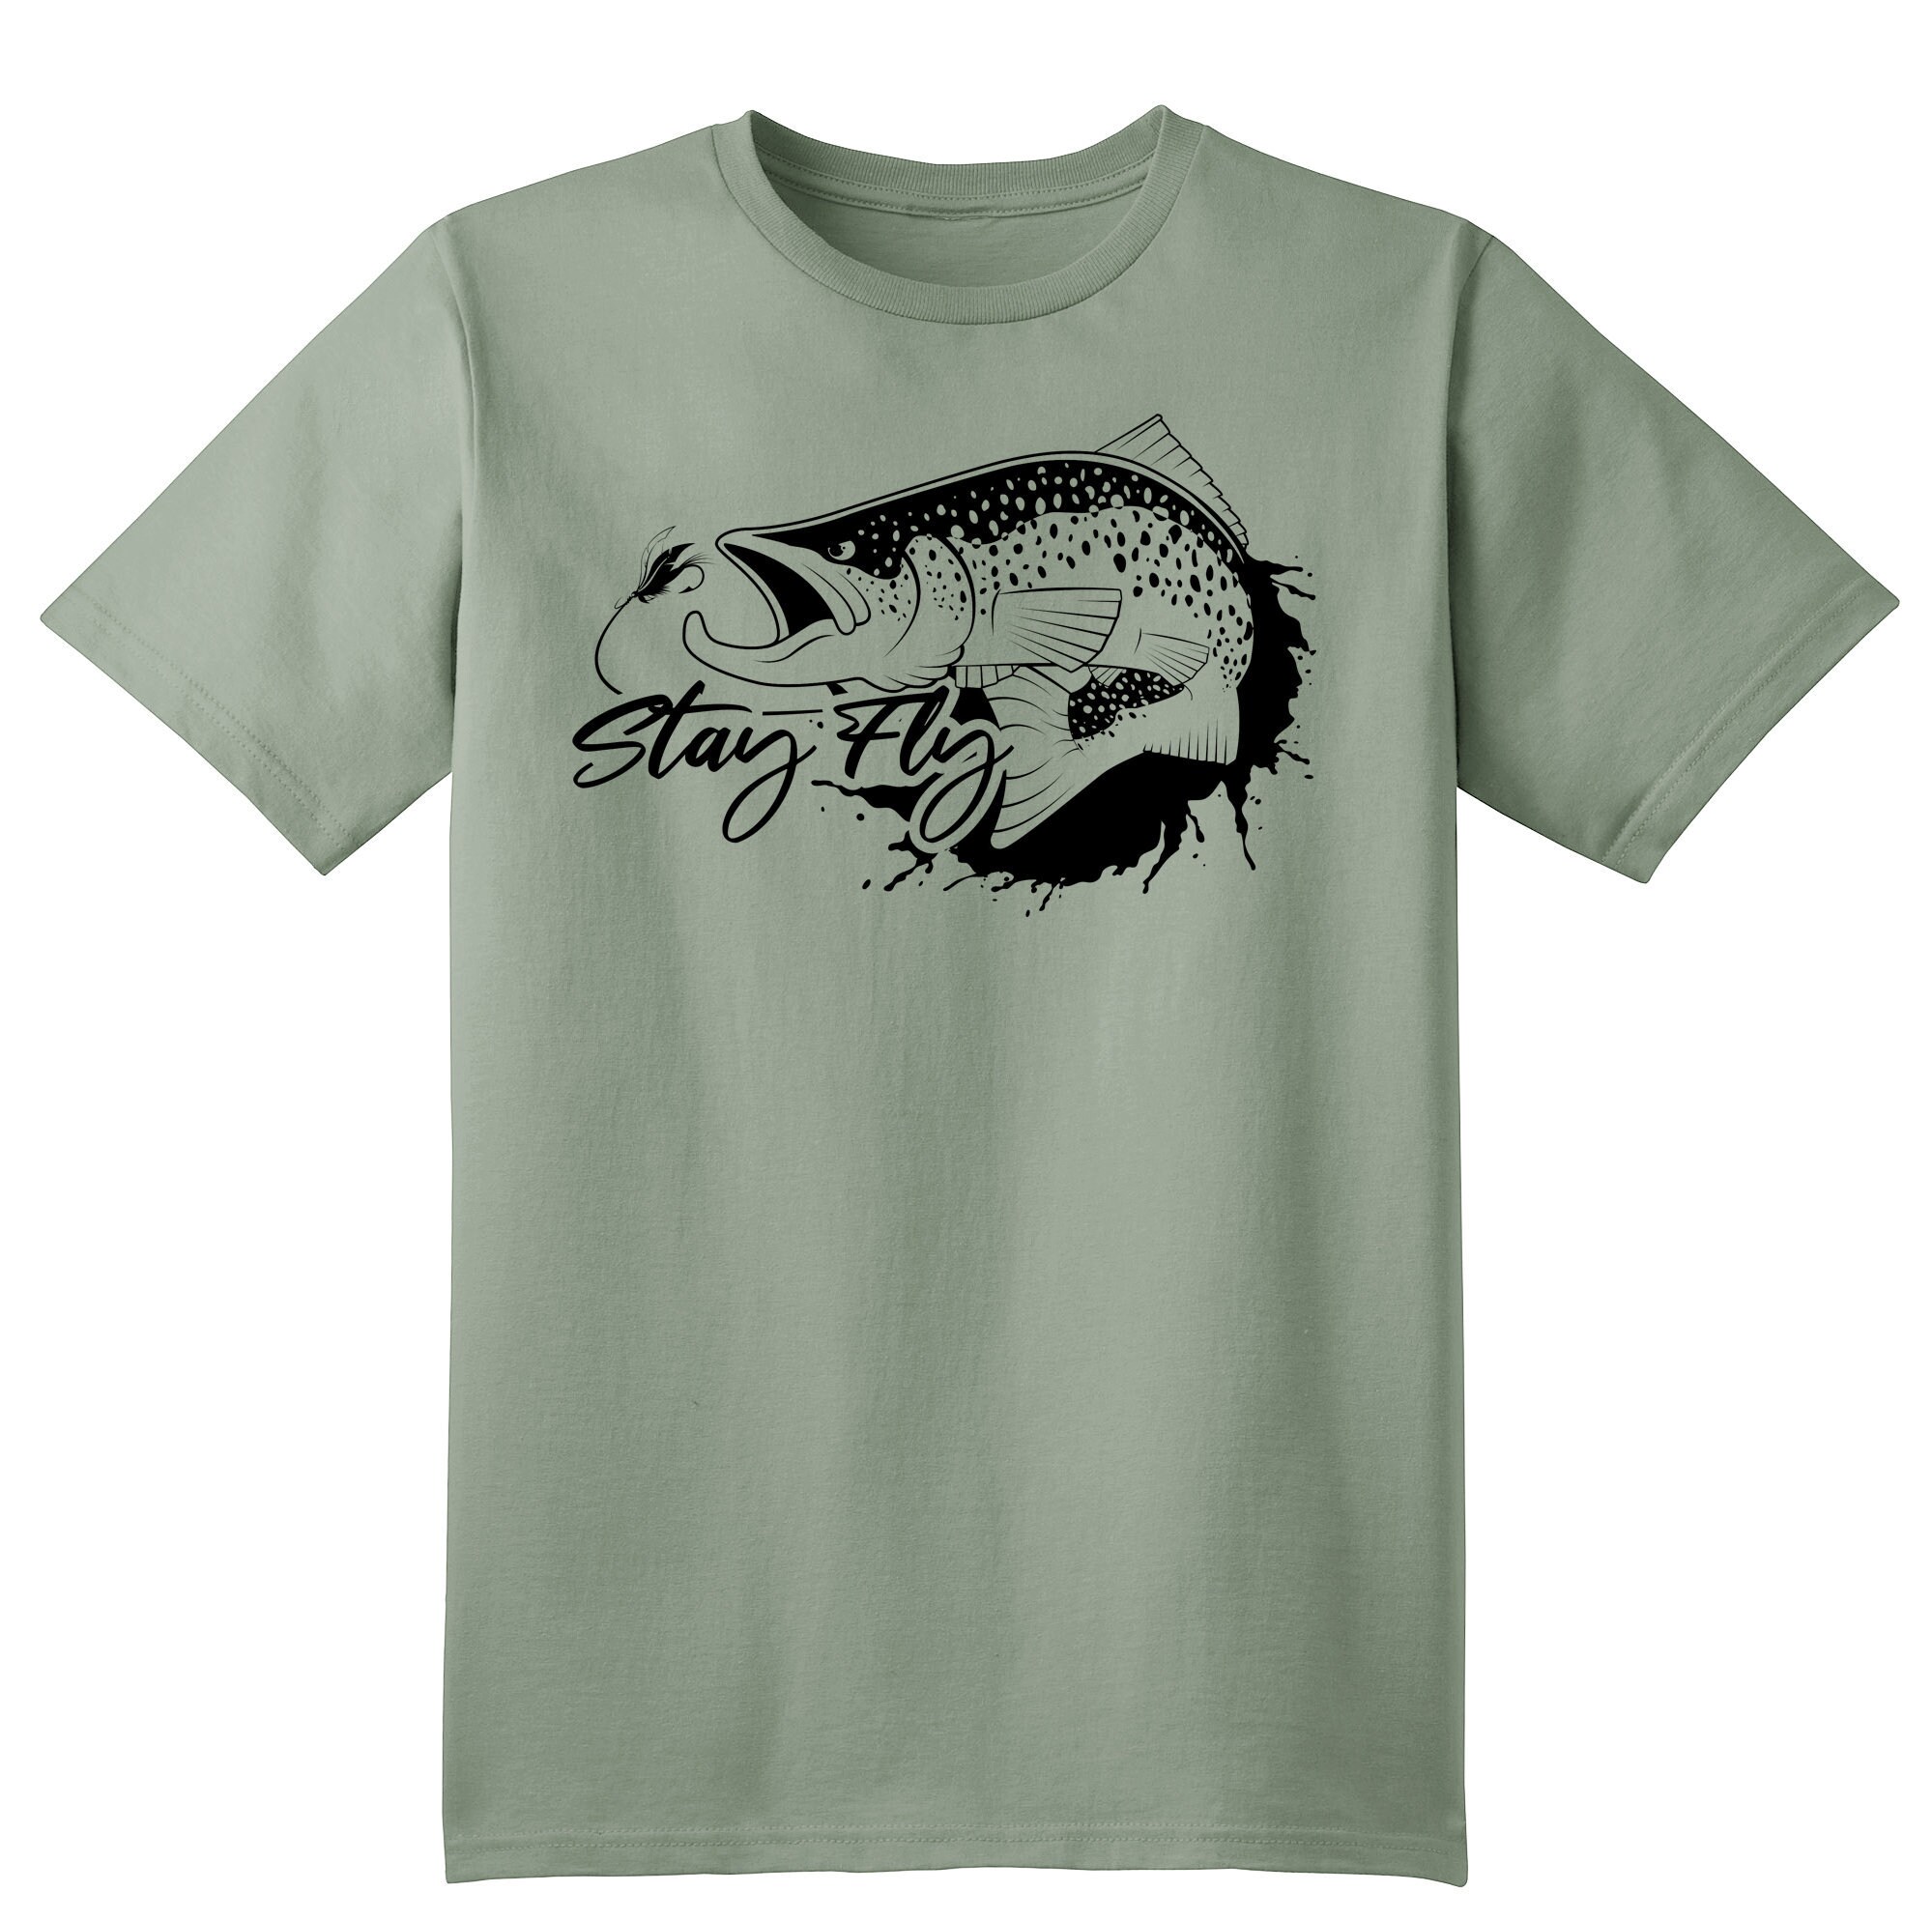 Stay Fly T-shirts, Trout T-shirts, Fishing T-shirts 